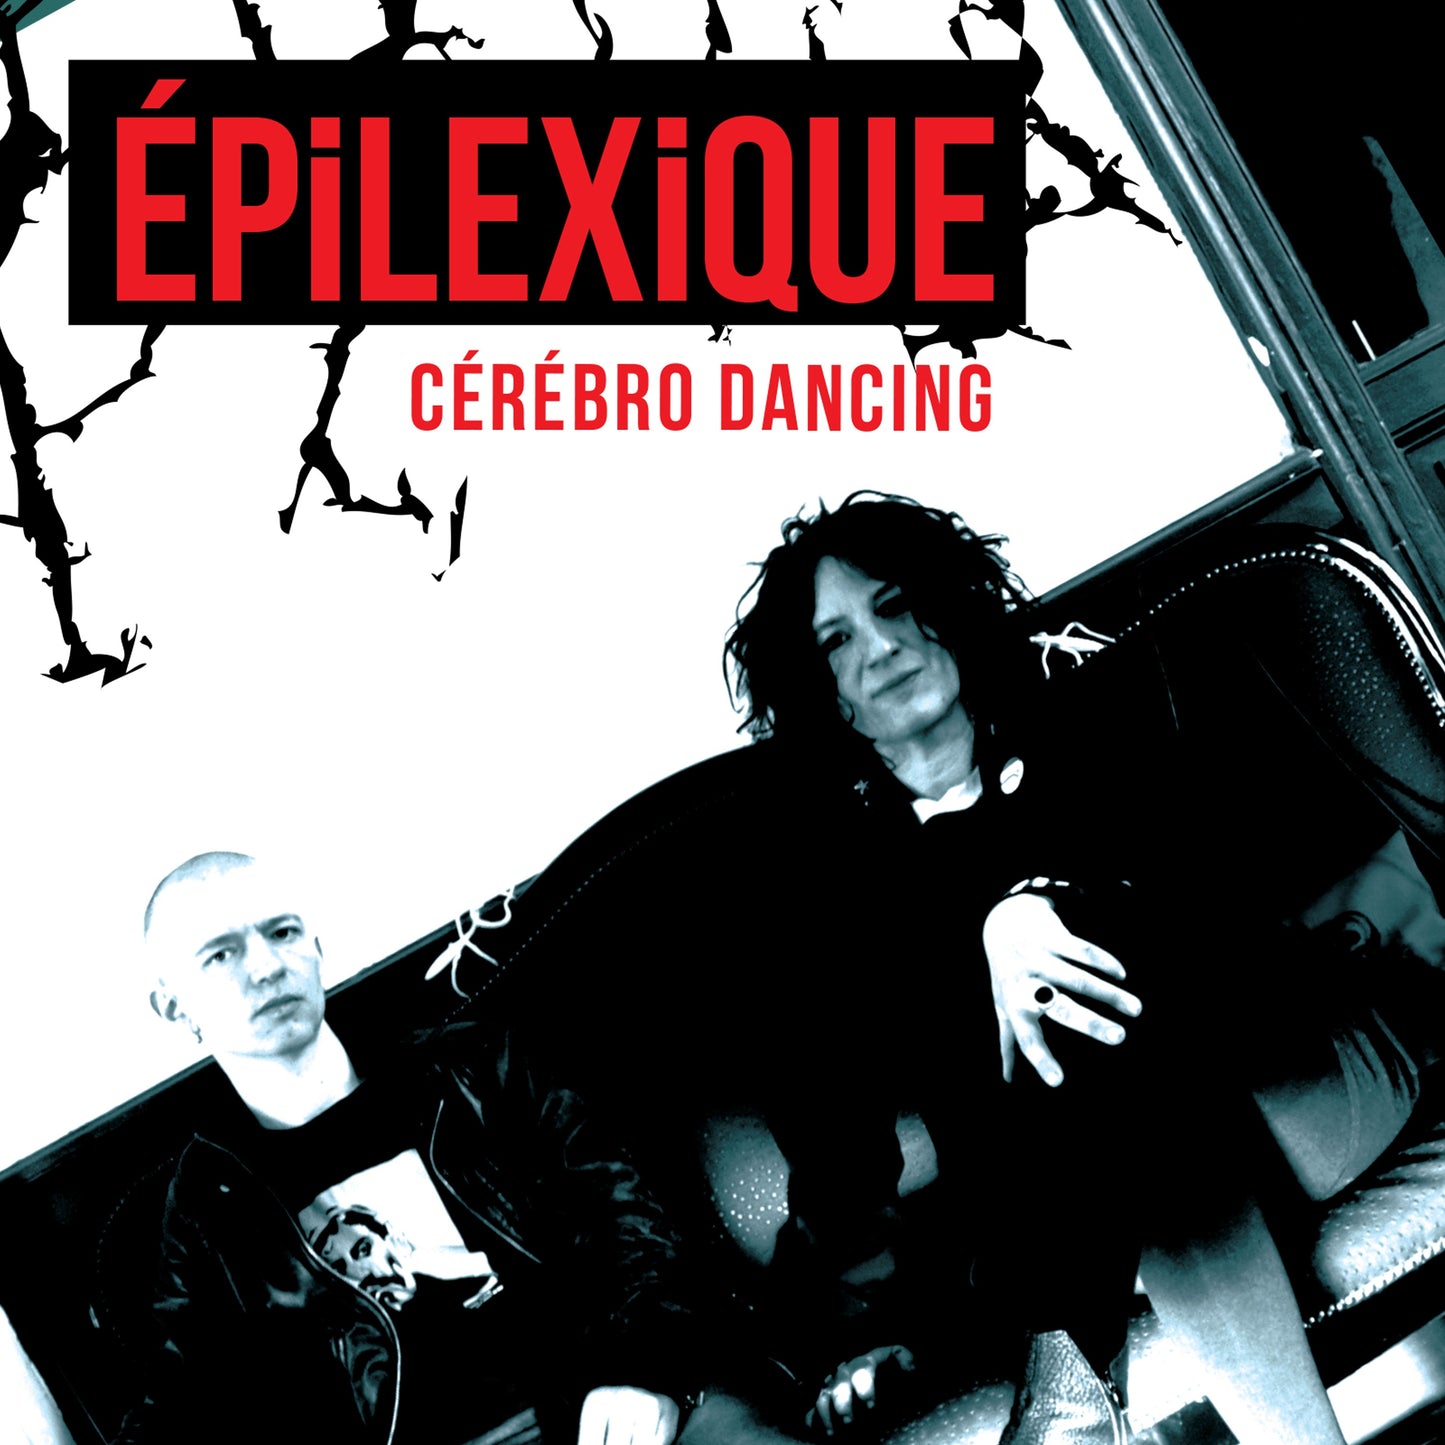 Pochette de : CÉRÉBRO DANCING - EPILEXIQUE (CD)